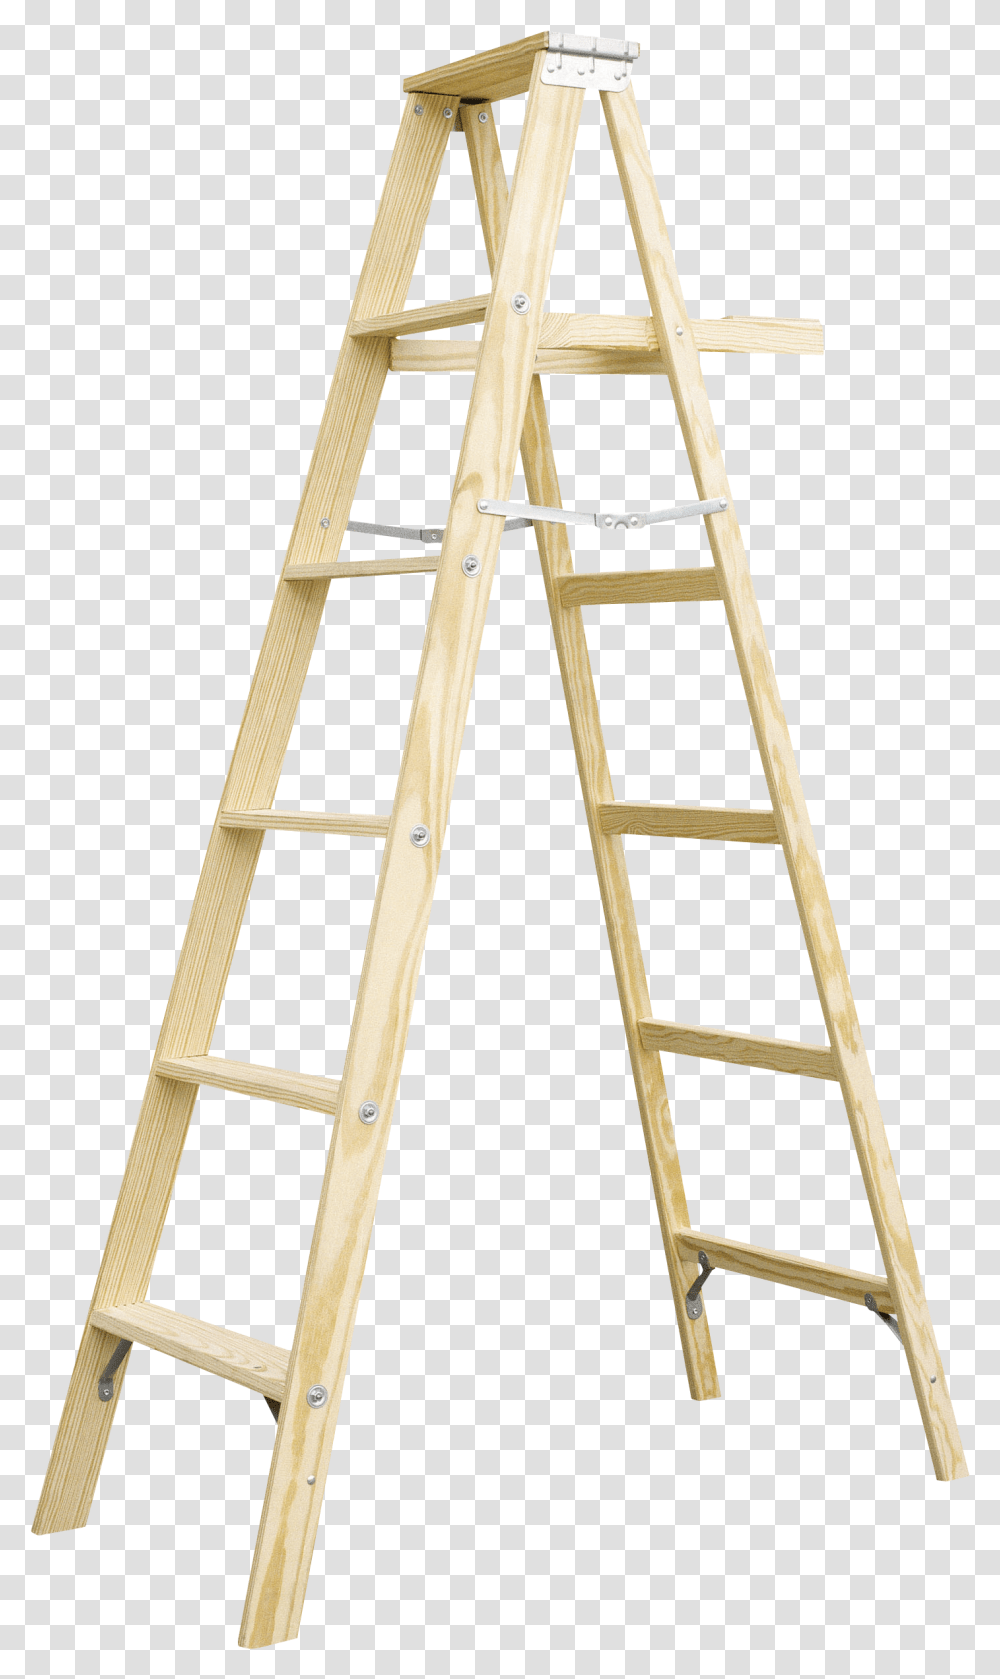 Ladder Image Ladder Transparency, Furniture, Bar Stool, Utility Pole, Stand Transparent Png